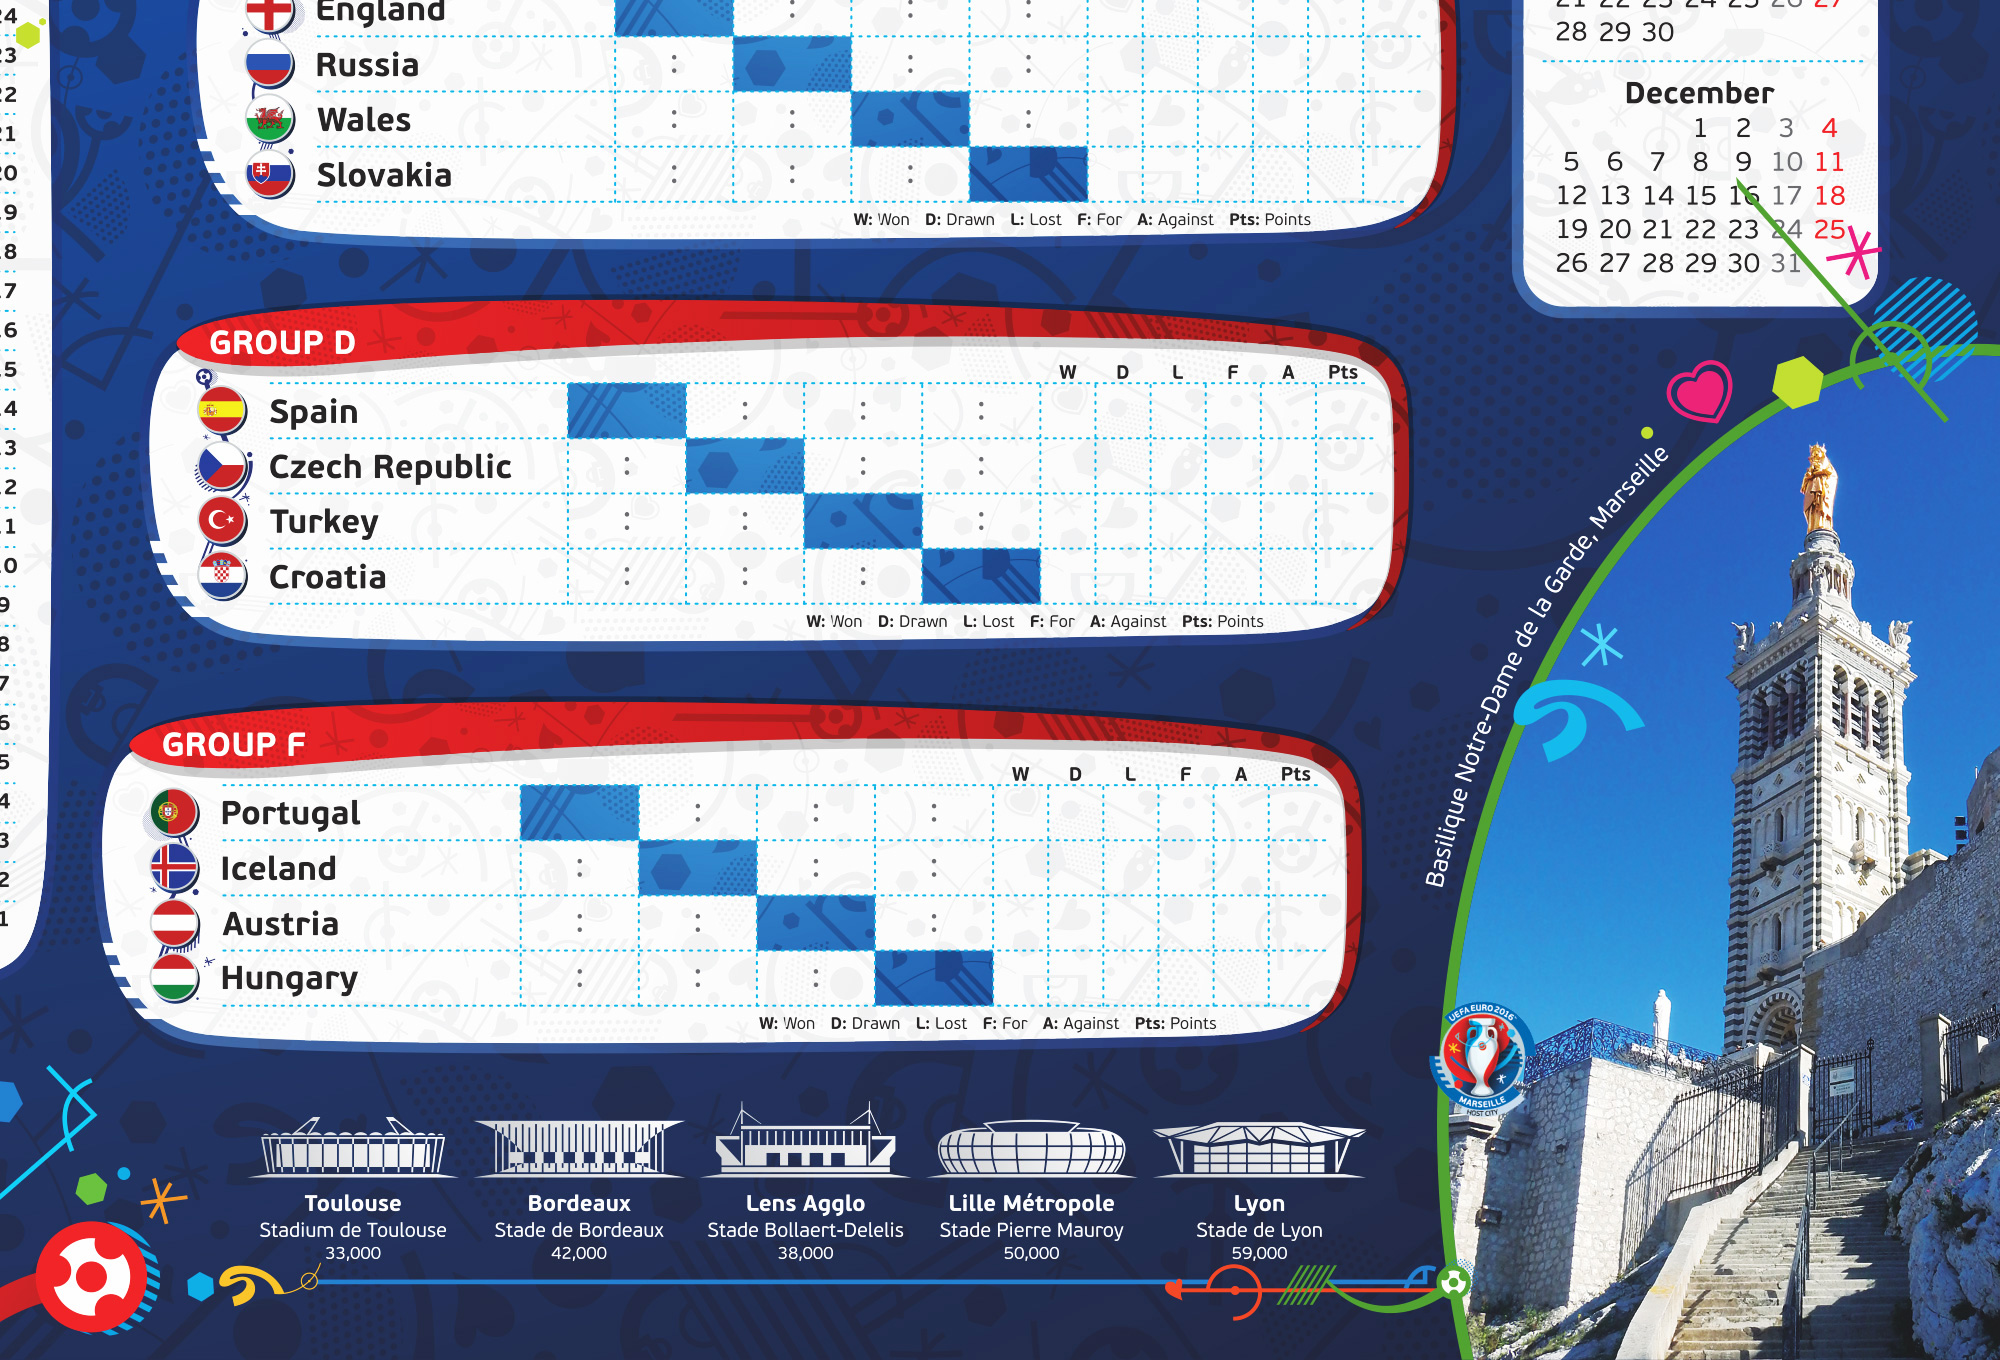 EURO2016 Wallchart-UEFA EURO2016 France Poster Design